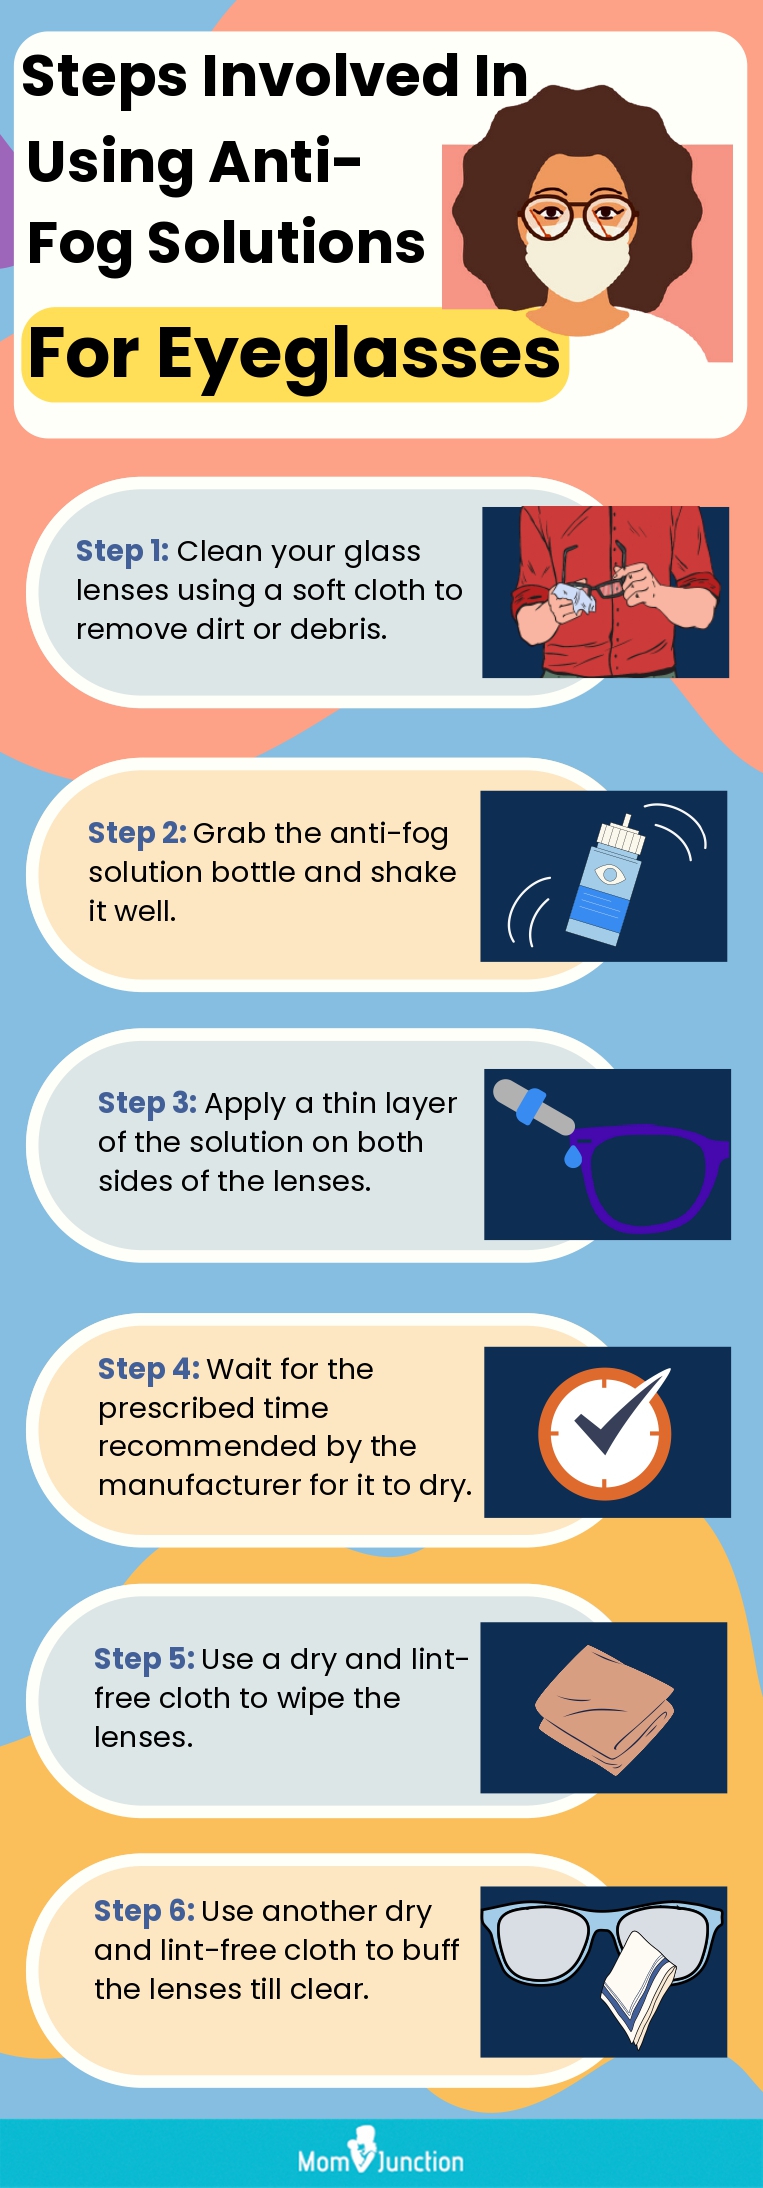 Steps Involved In Using Anti-Fog Solutions For Eyeglasses(infographic)